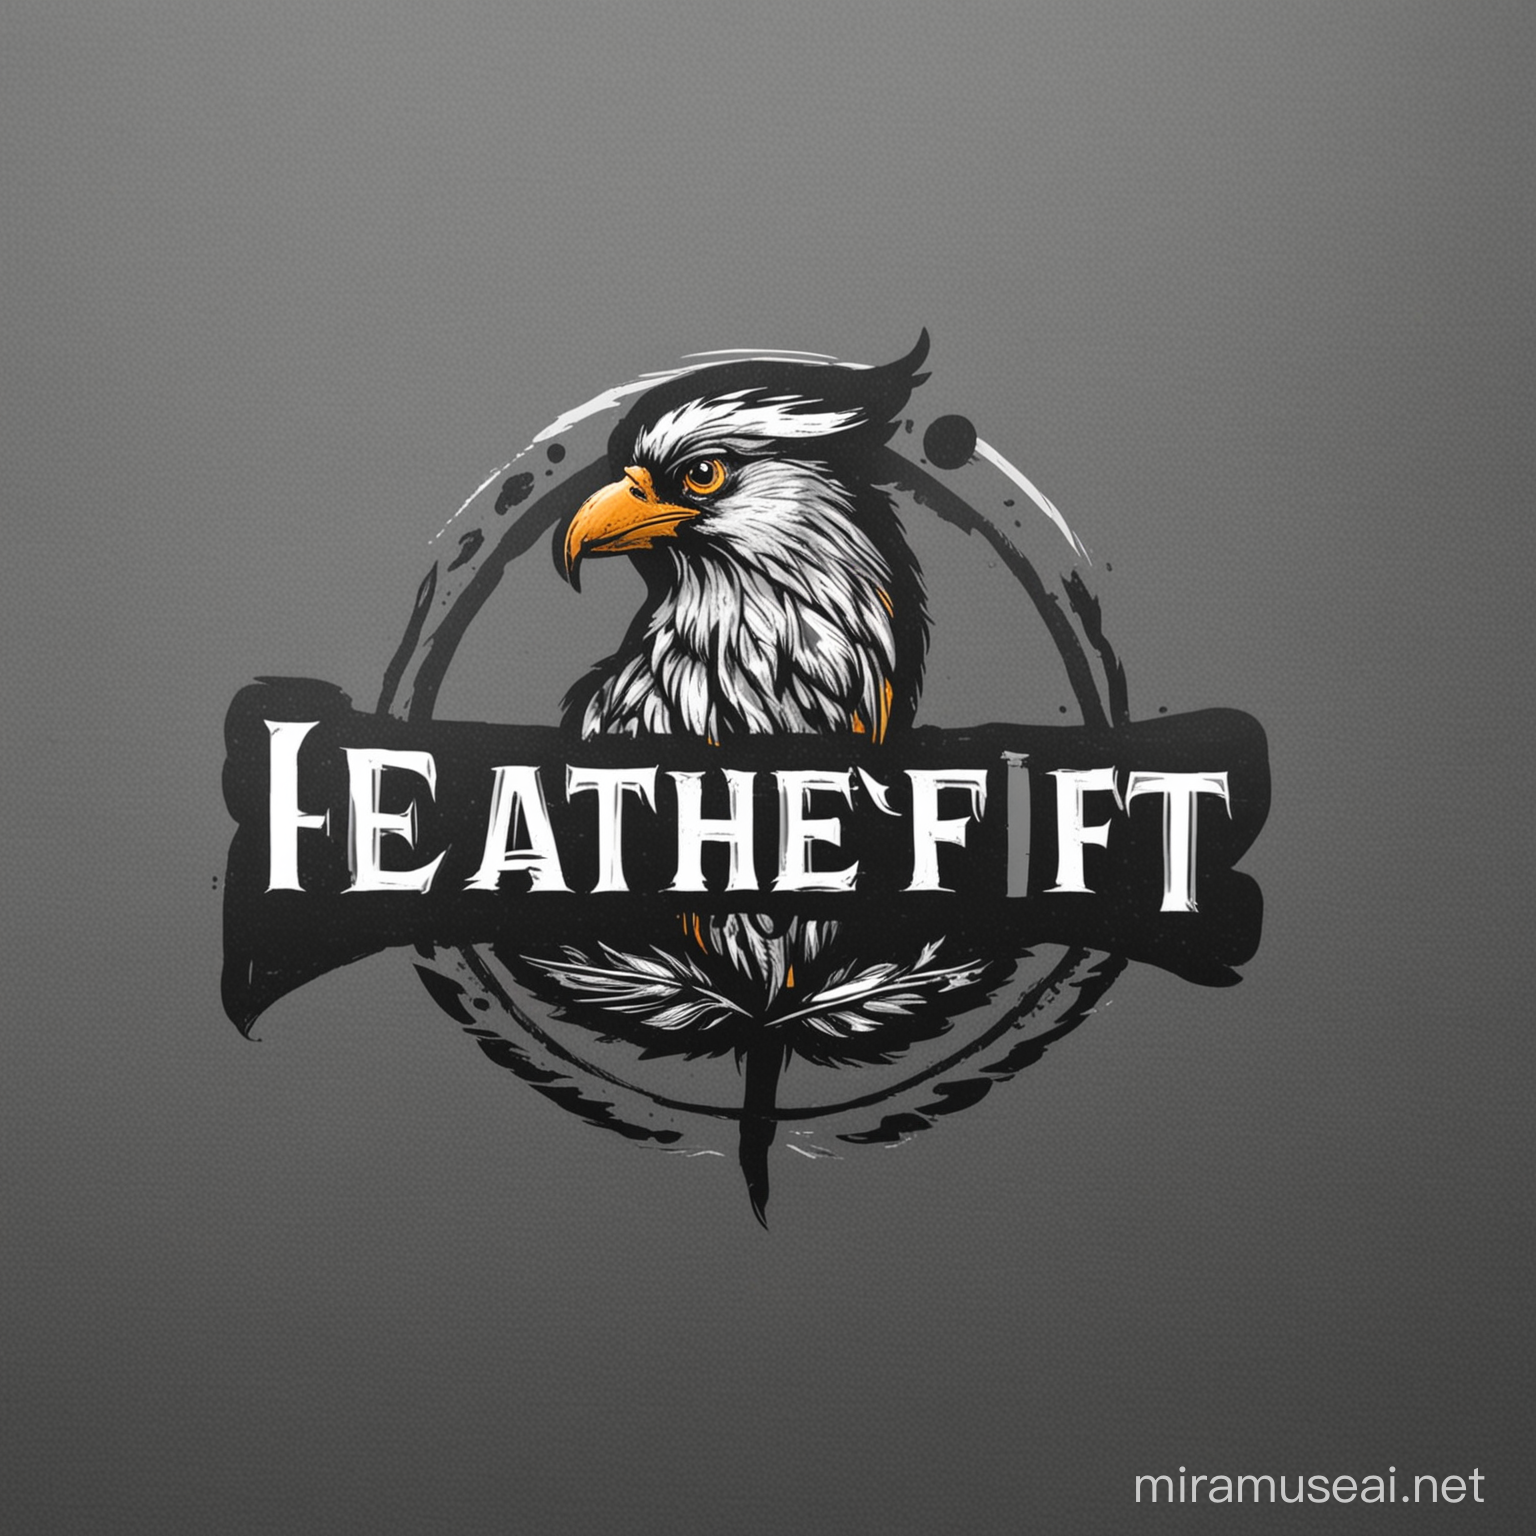 FeatherFit logo for birds